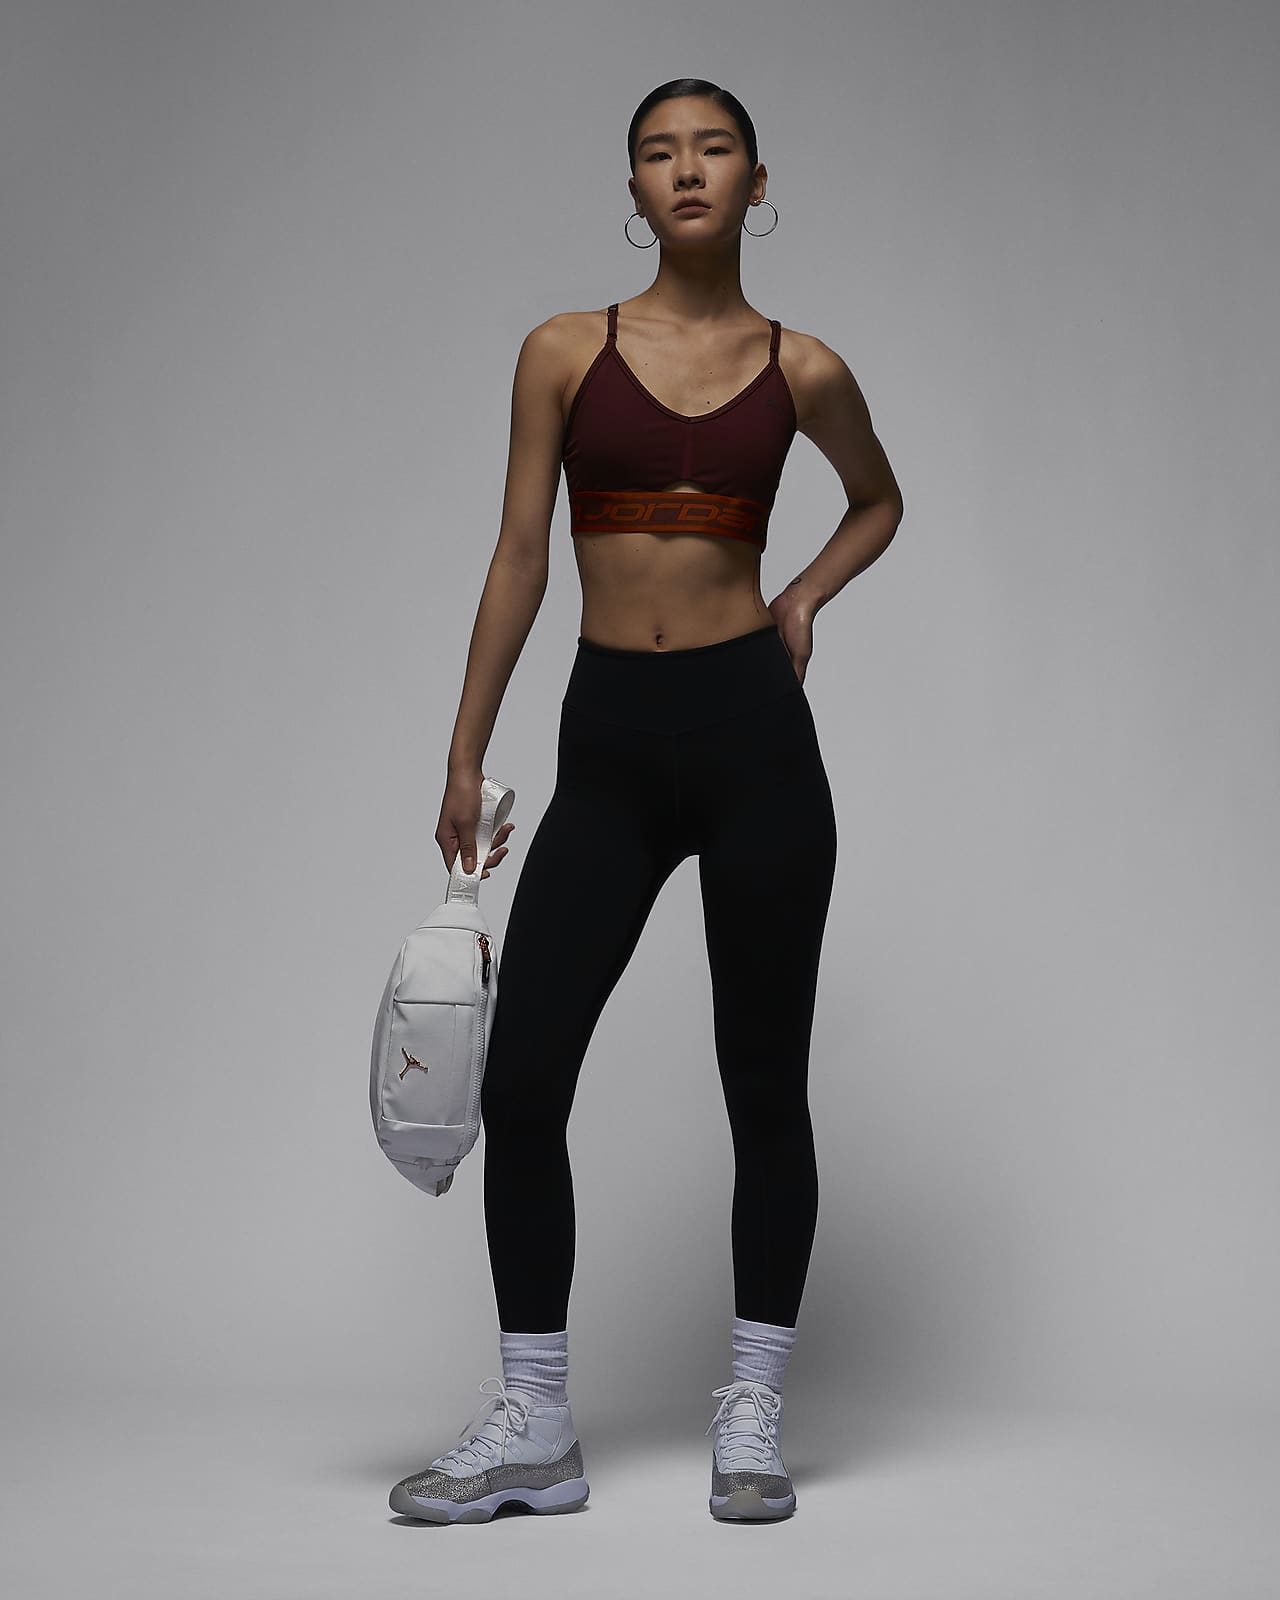 Nike Training Ultrabreathe Indy light support sports bra in black